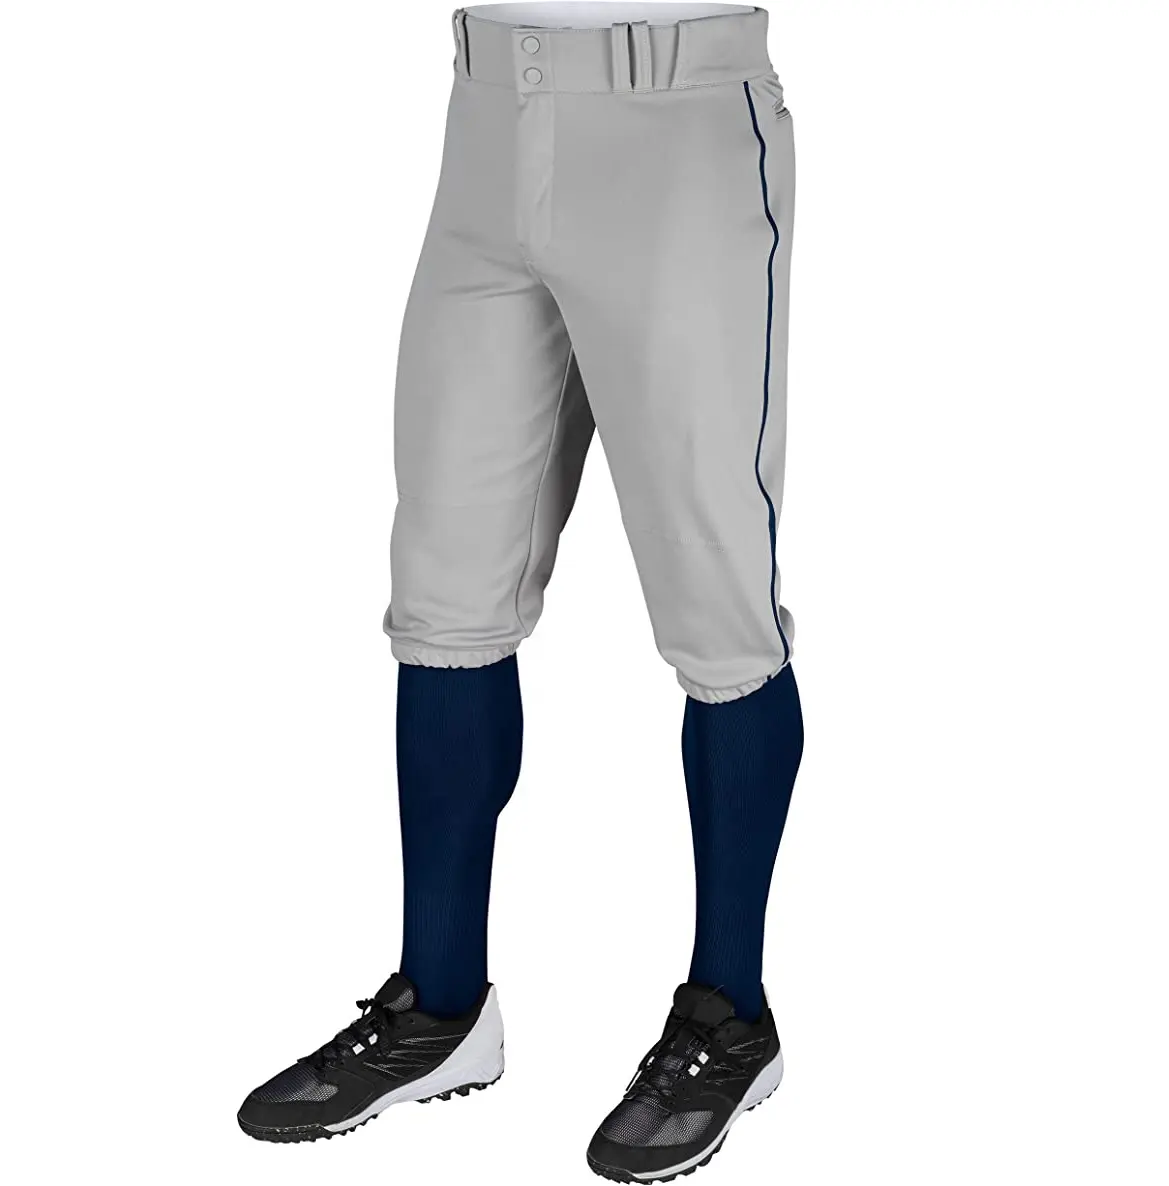 Pantalon de base-ball avec passepoil latéral en Polyester, pantalon de base-ball Triple couronne à fond ouvert pour homme